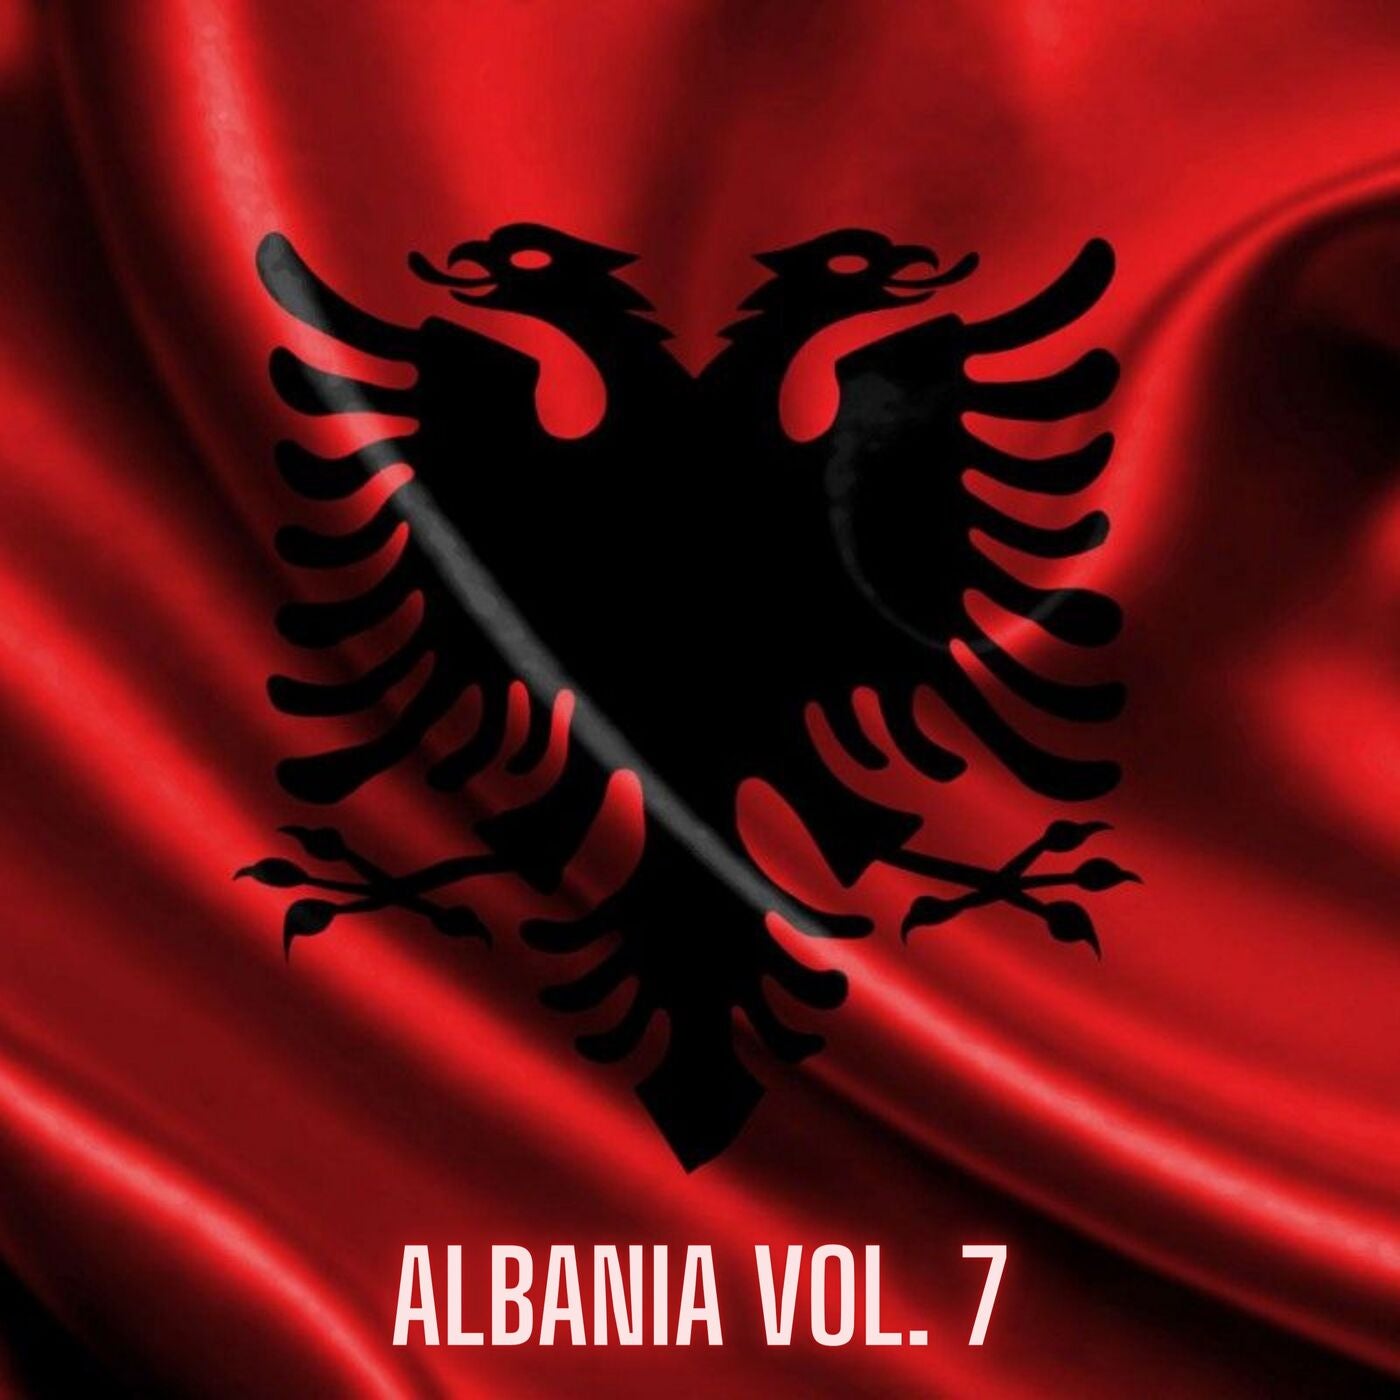 Albania Vol. 7